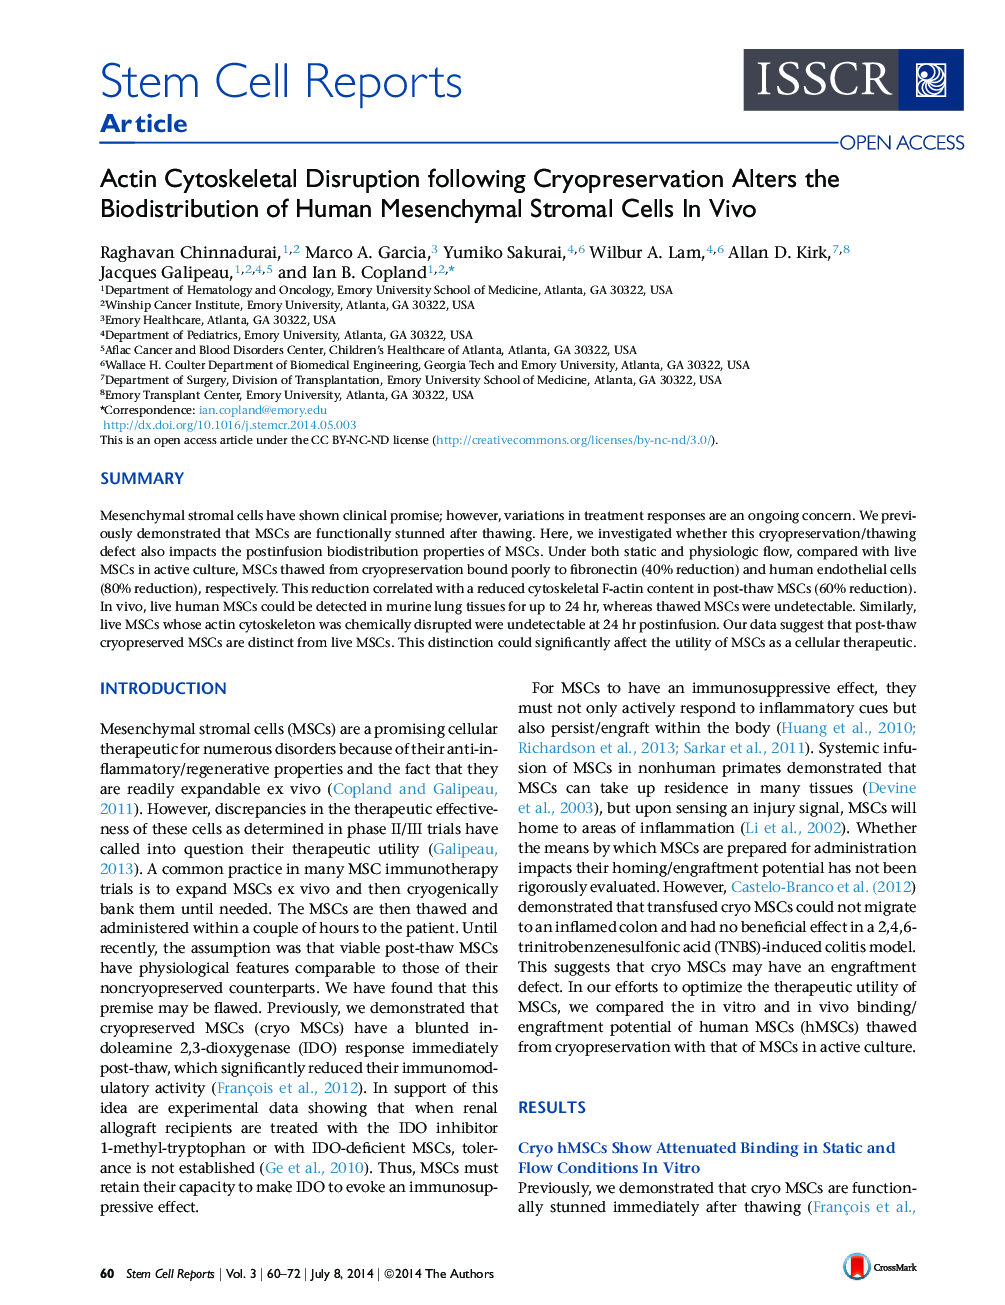 Actin Cytoskeletal Disruption following Cryopreservation Alters the Biodistribution of Human Mesenchymal Stromal Cells In Vivo 